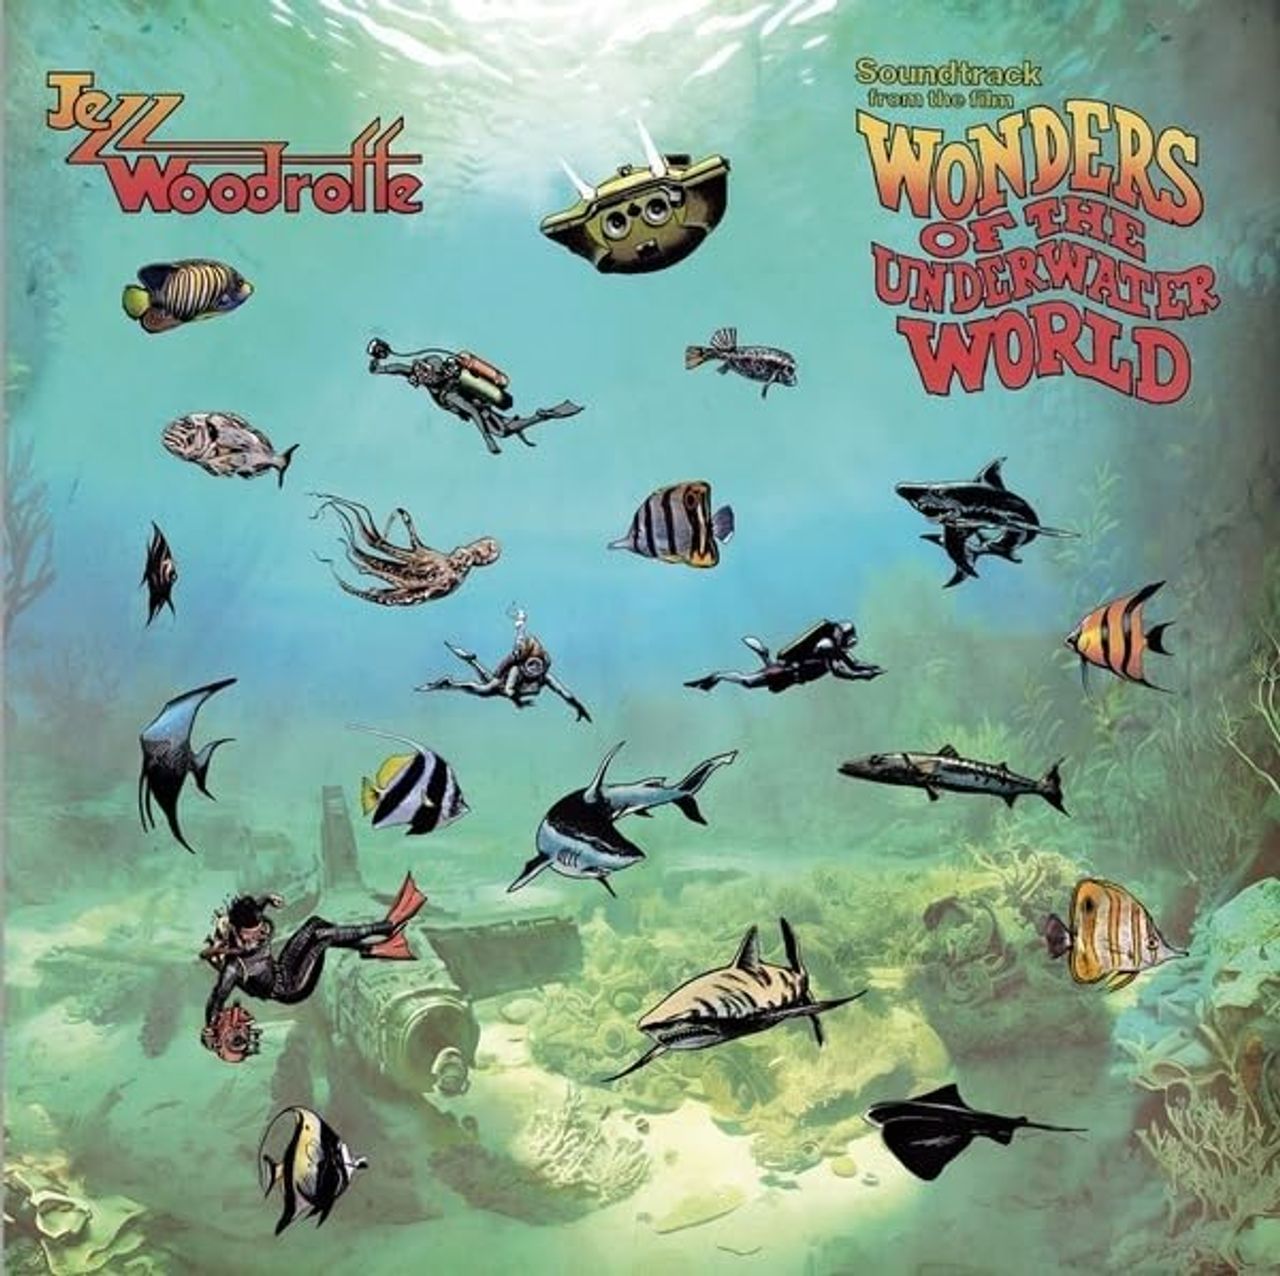 Jezz Woodroffe Wonders Of The Underwater World + Sticker Sheet - Sealed UK vinyl LP album (LP record) JBH102LP